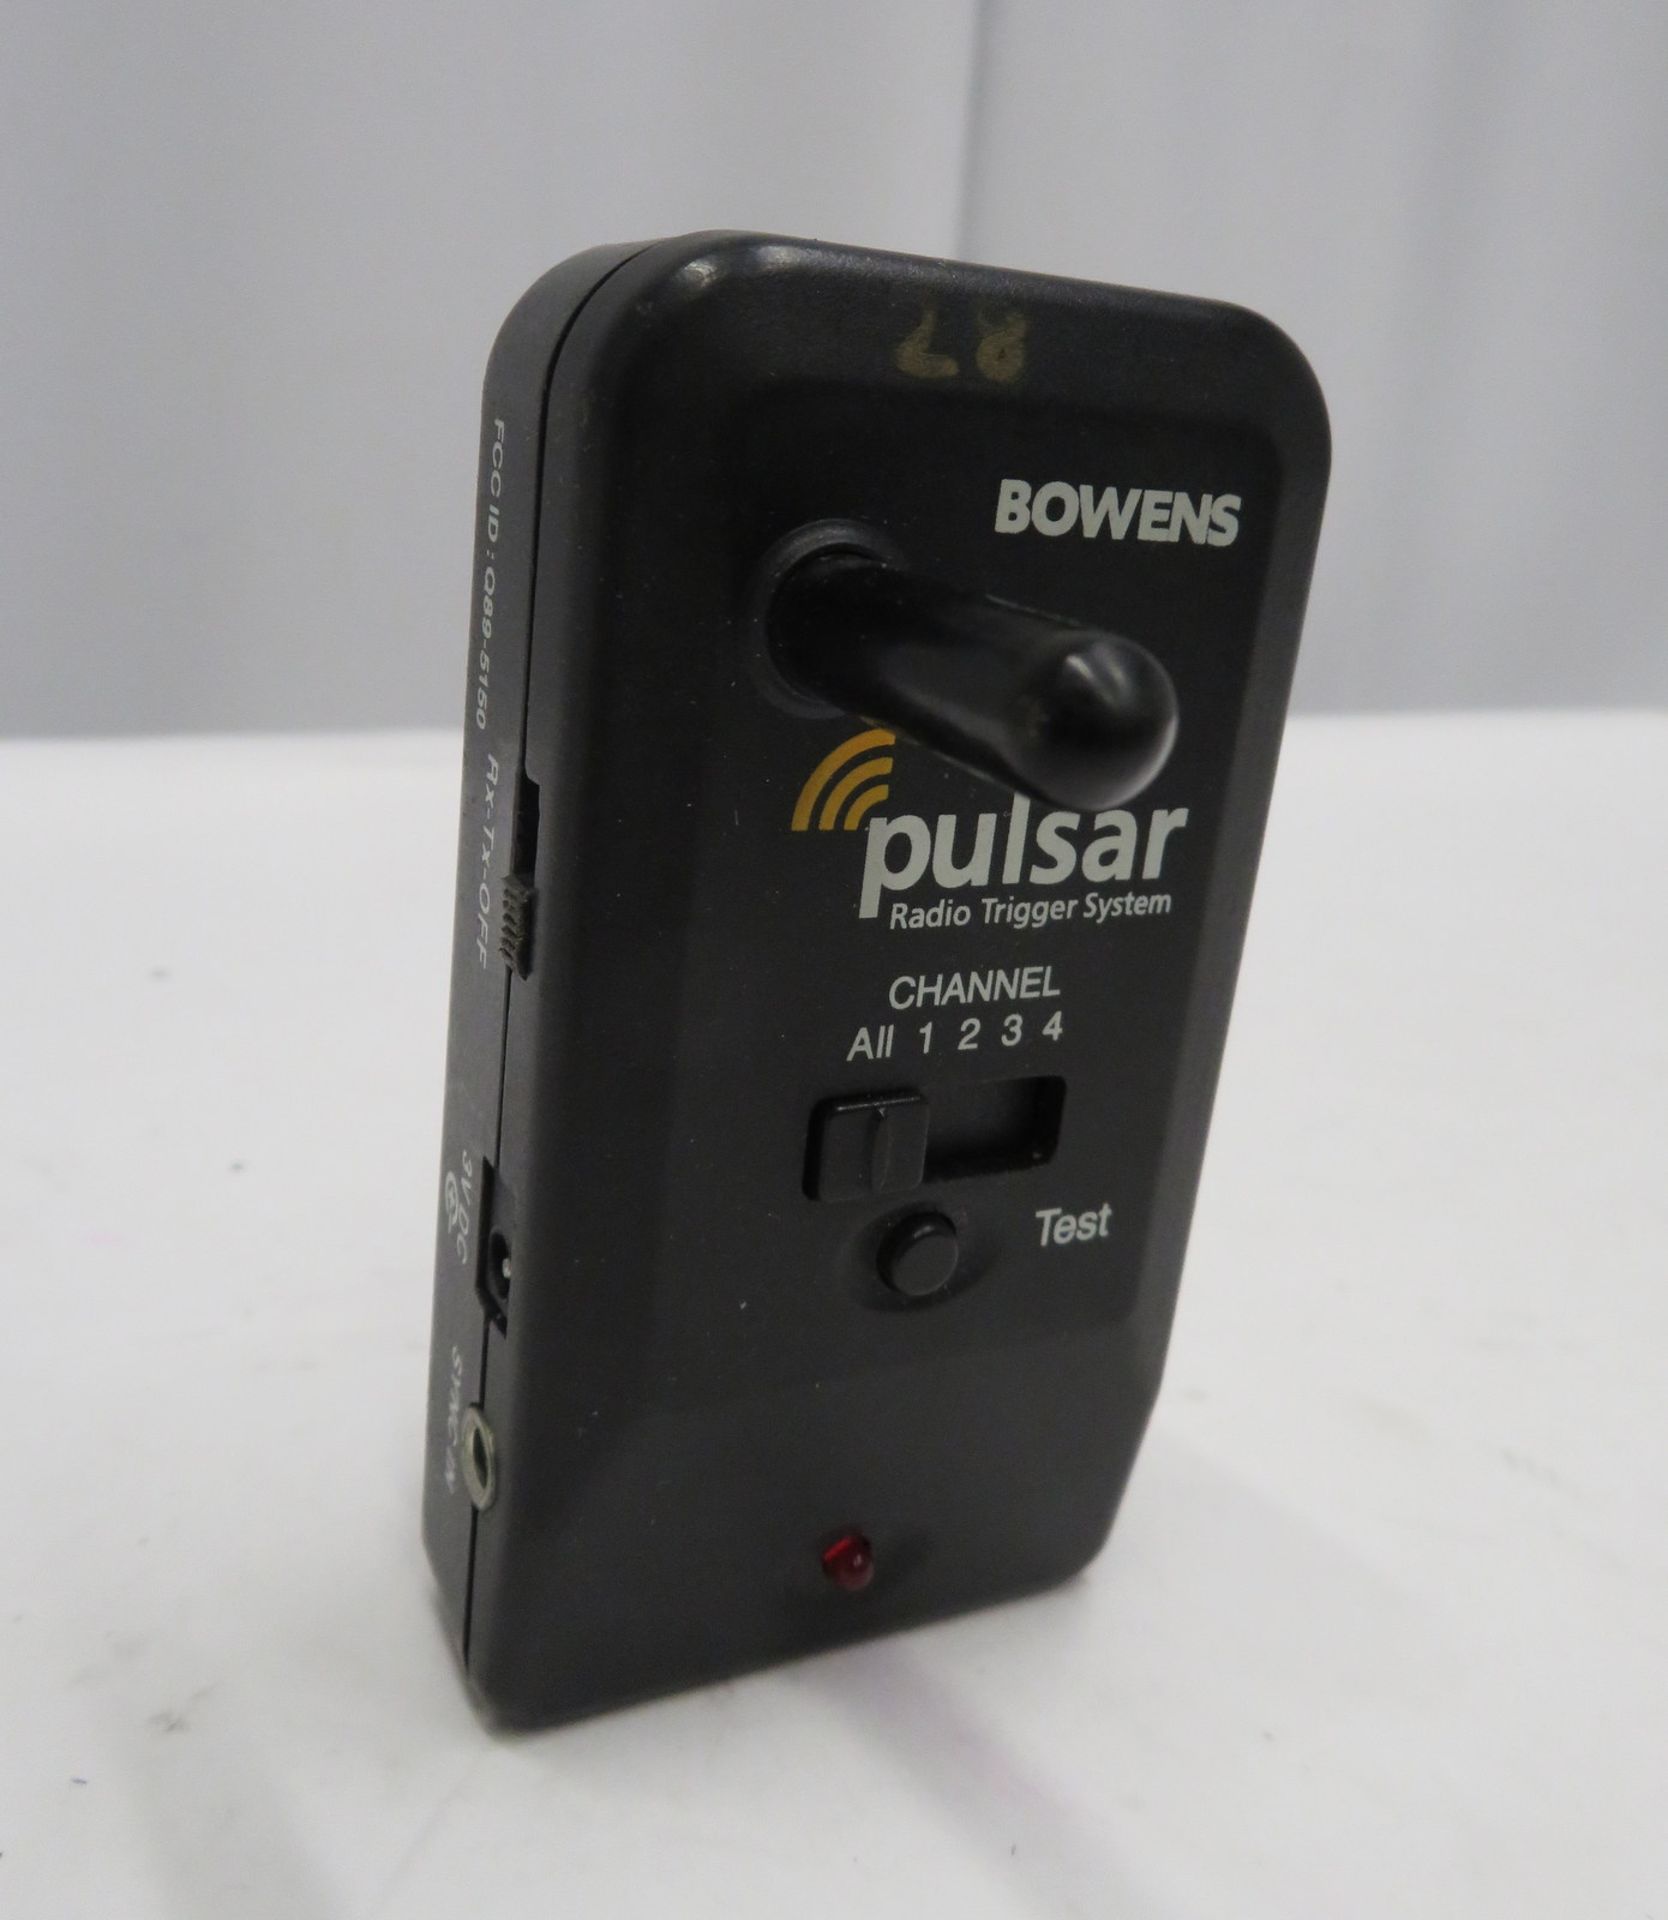 Bowens Pulsar radio trigger system, no battery cover